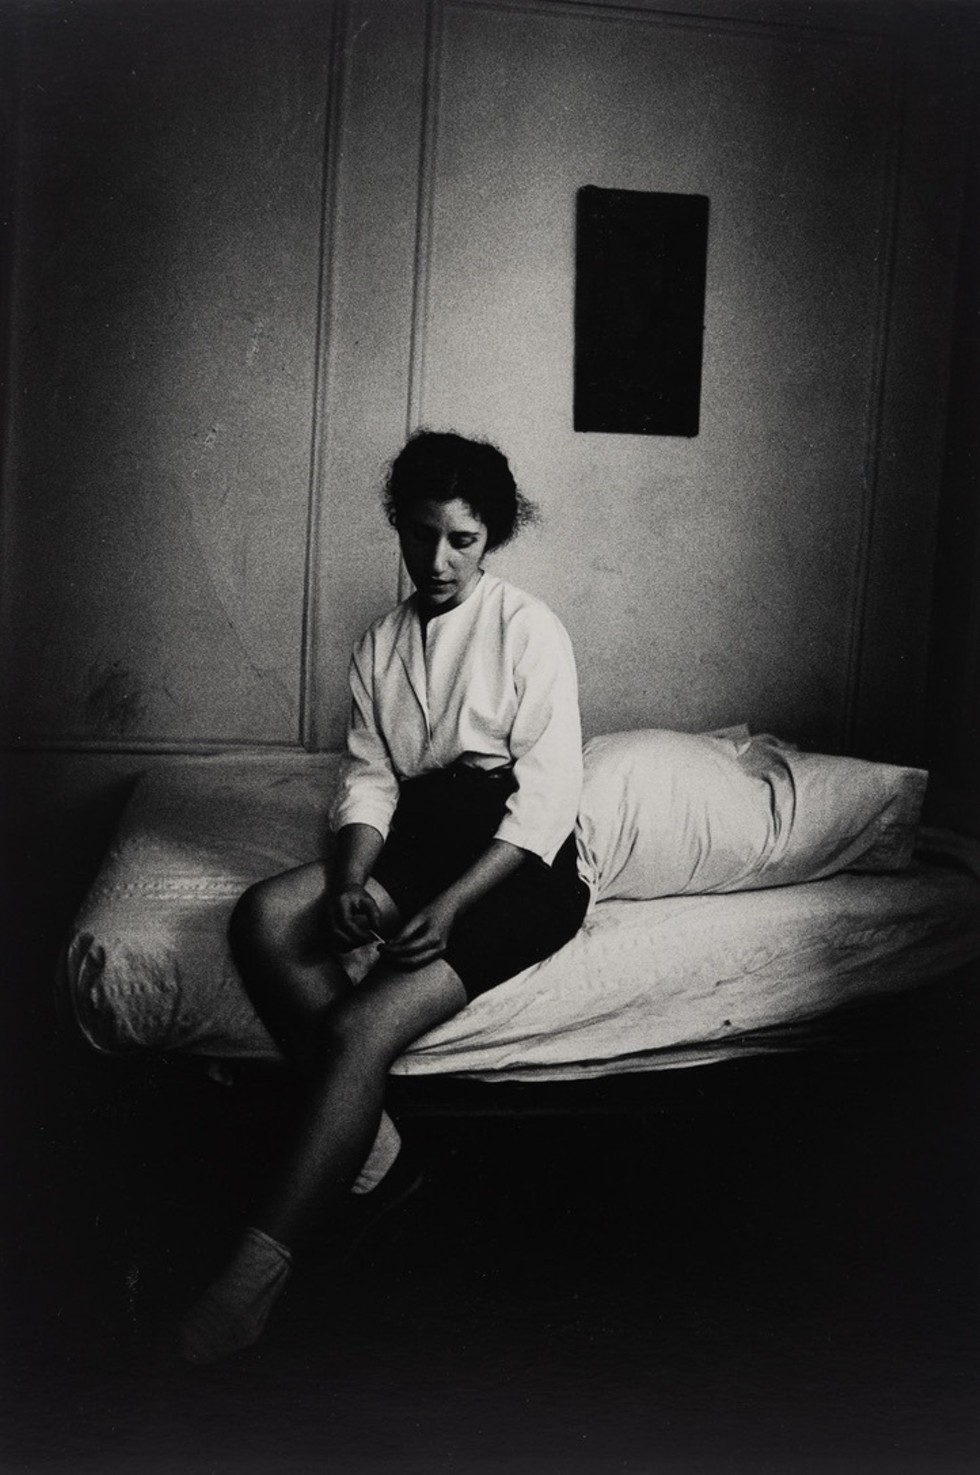 Diane Di Prima, New York City, 1957-59 Cover Photo: Memoirs of a Beatnik, 1988 Vintage, Gelatin Silver